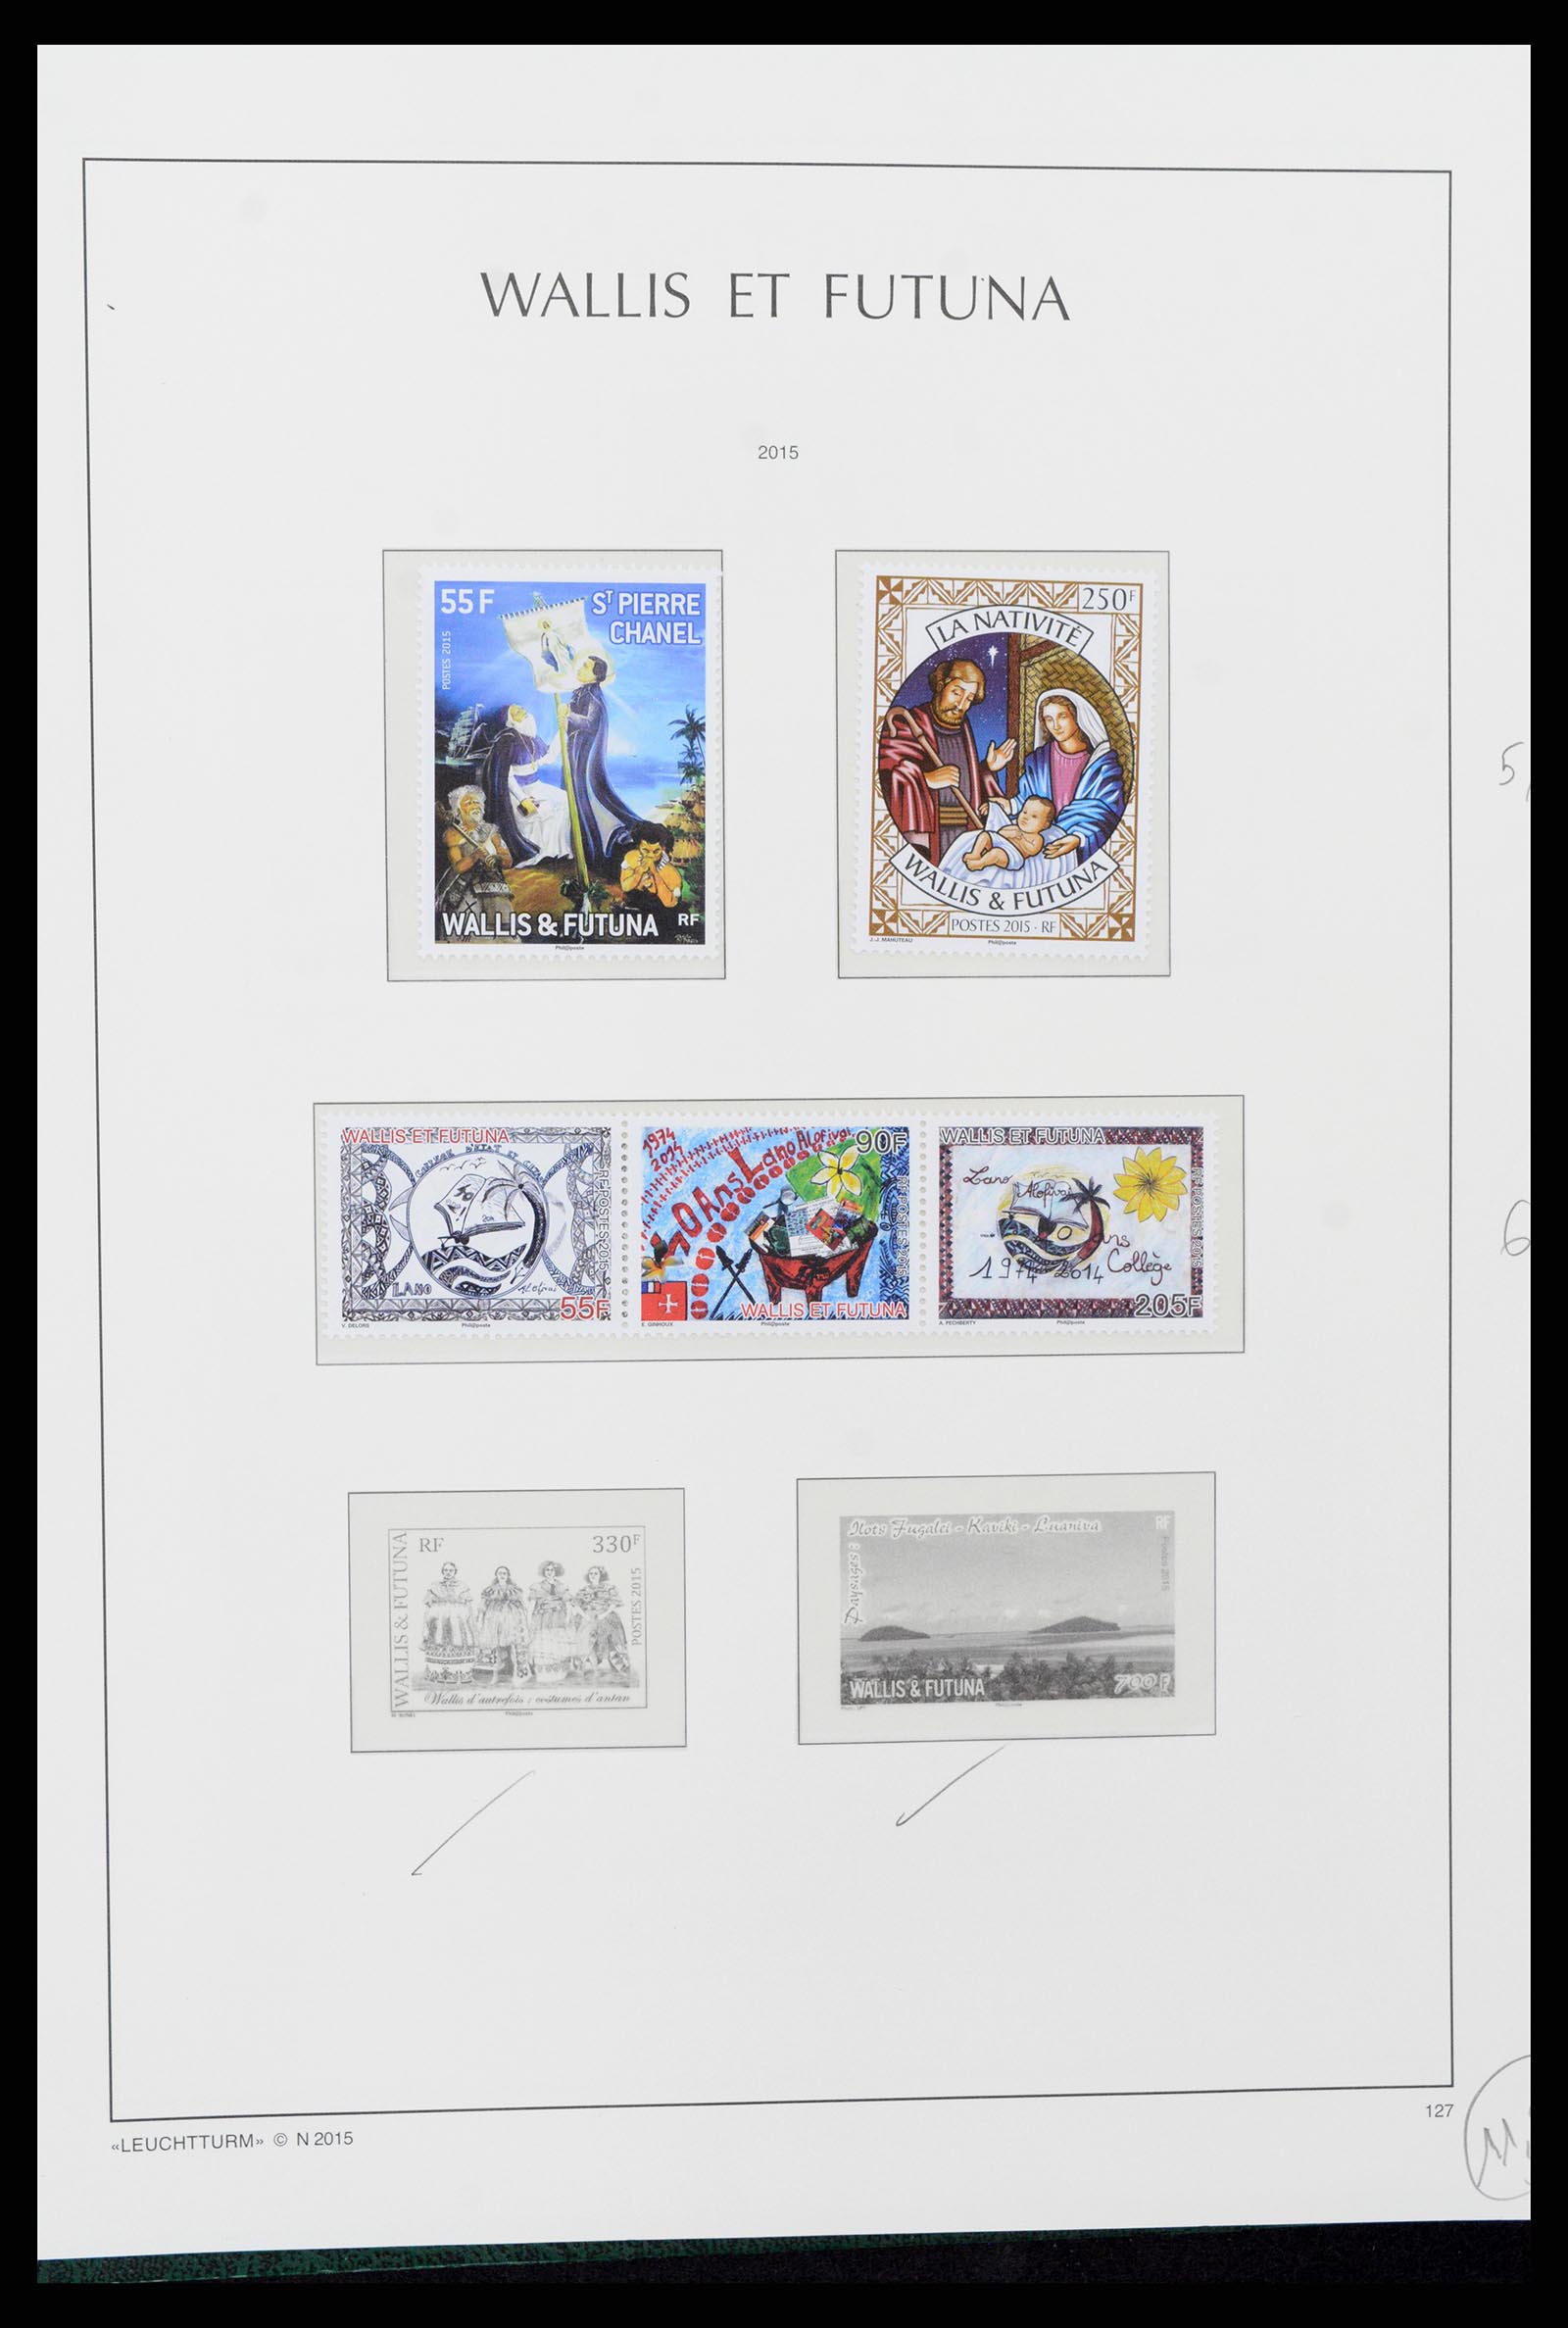 37316 094 - Stamp collection 37316 Wallis et Futuna 1980-2018!